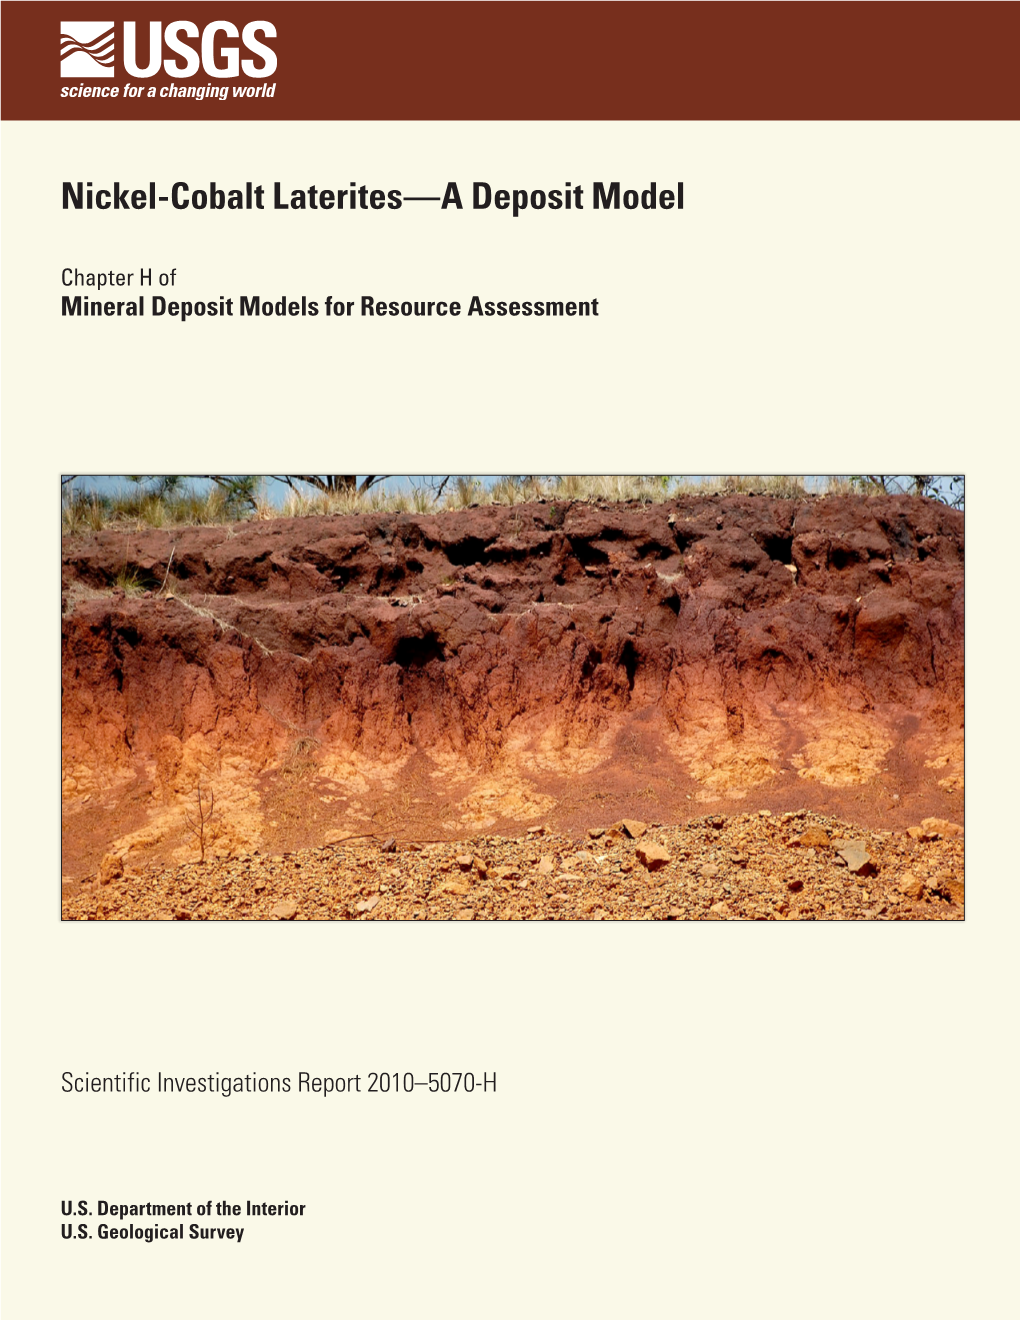 Nickel-Cobalt Laterites: a Deposit Model